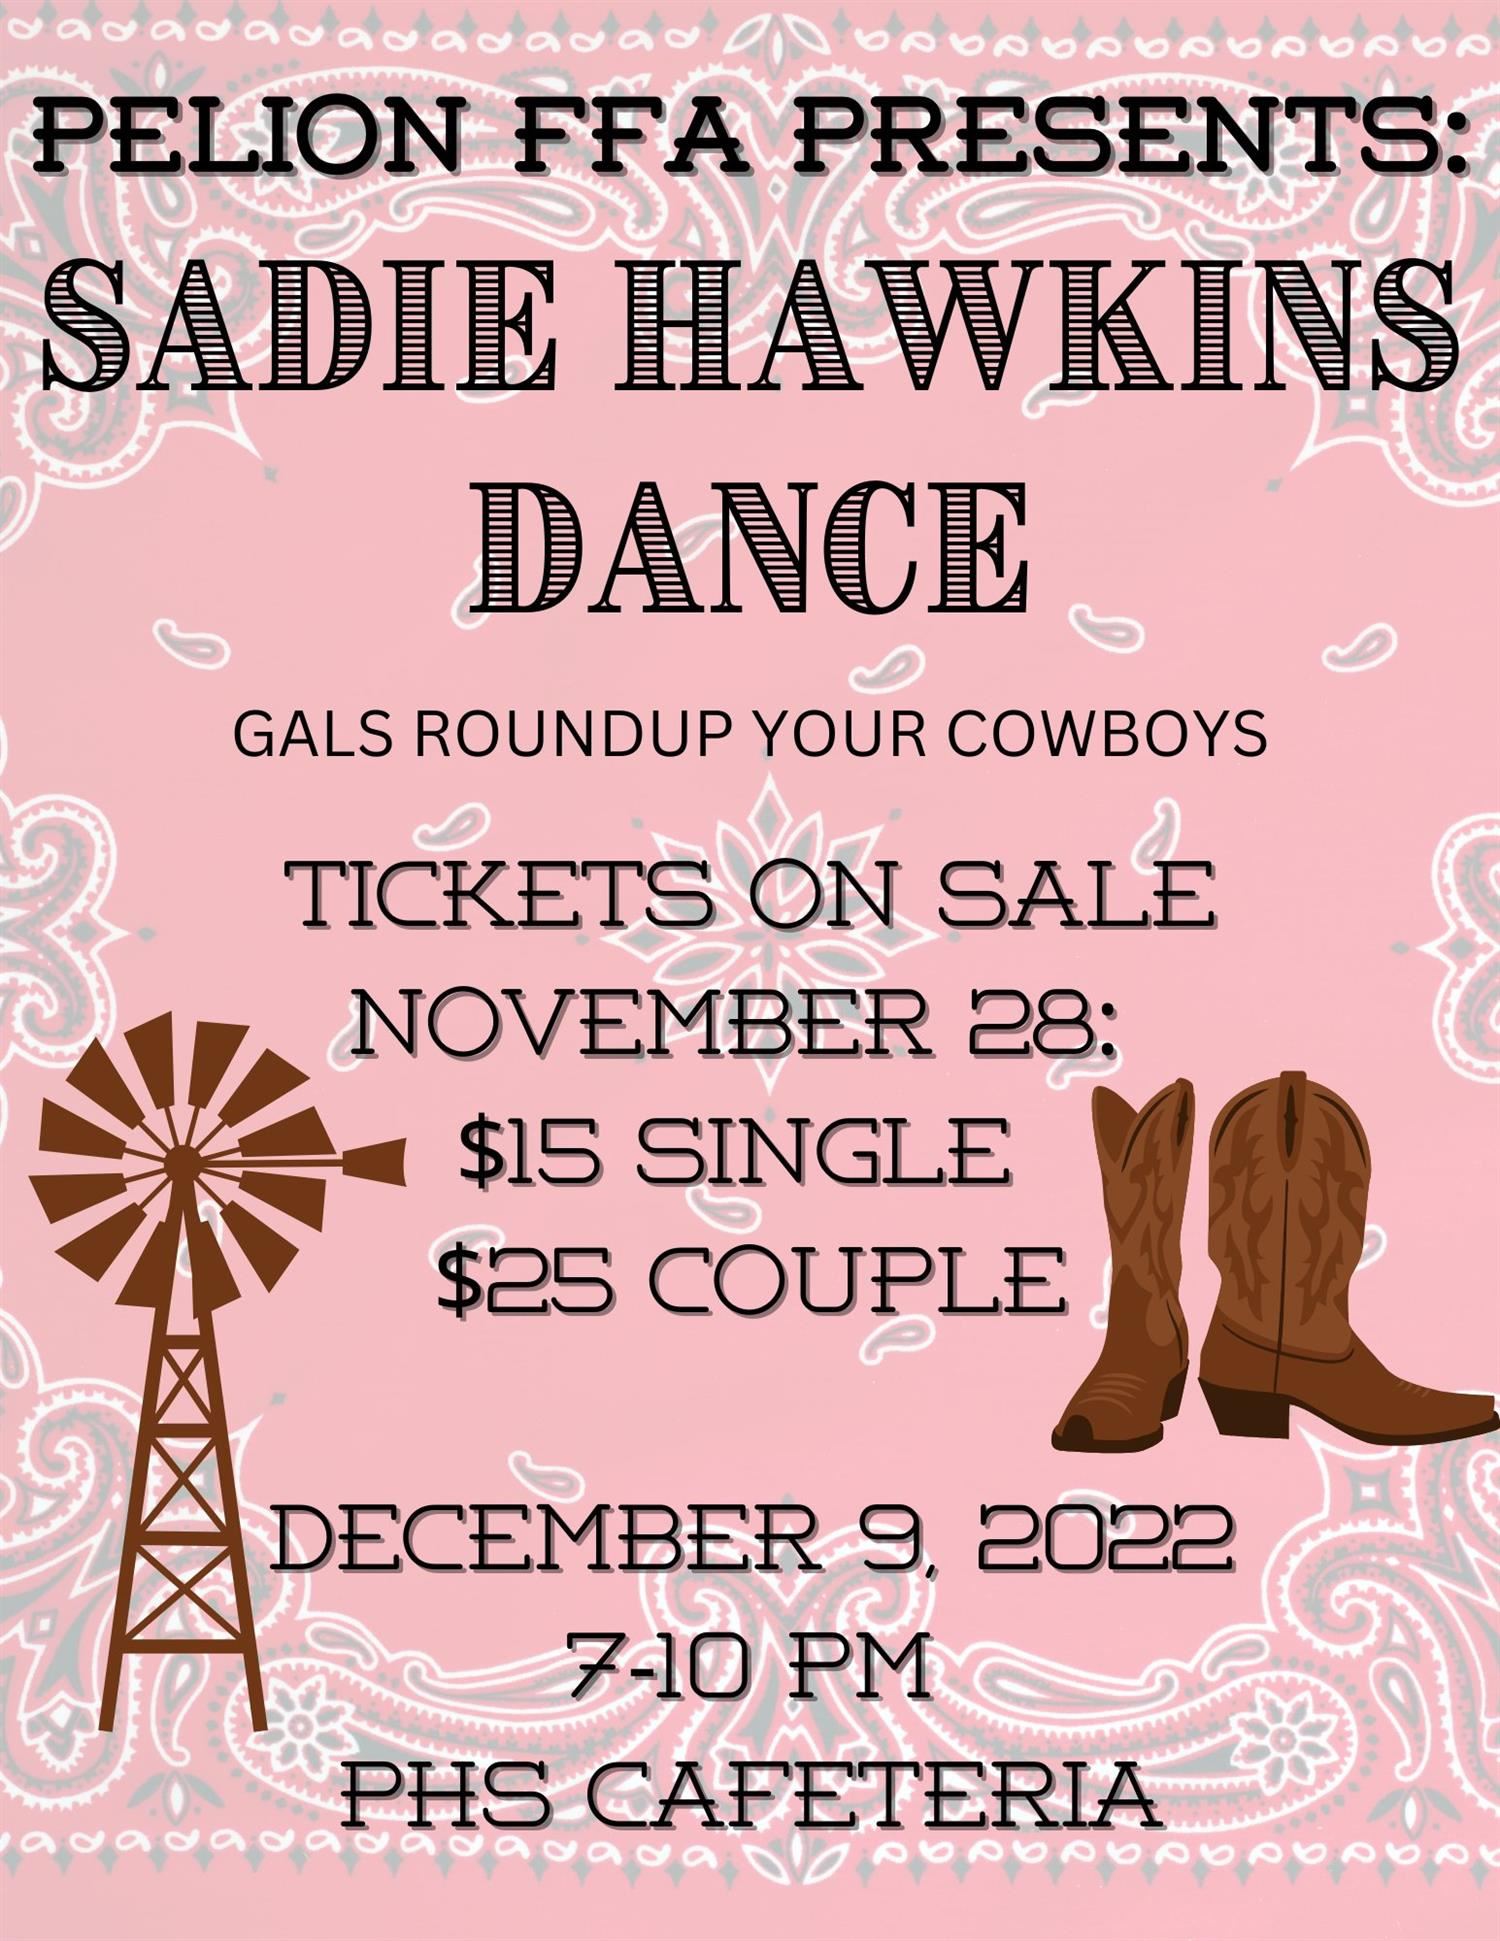  Sadie Hawkins Dance information